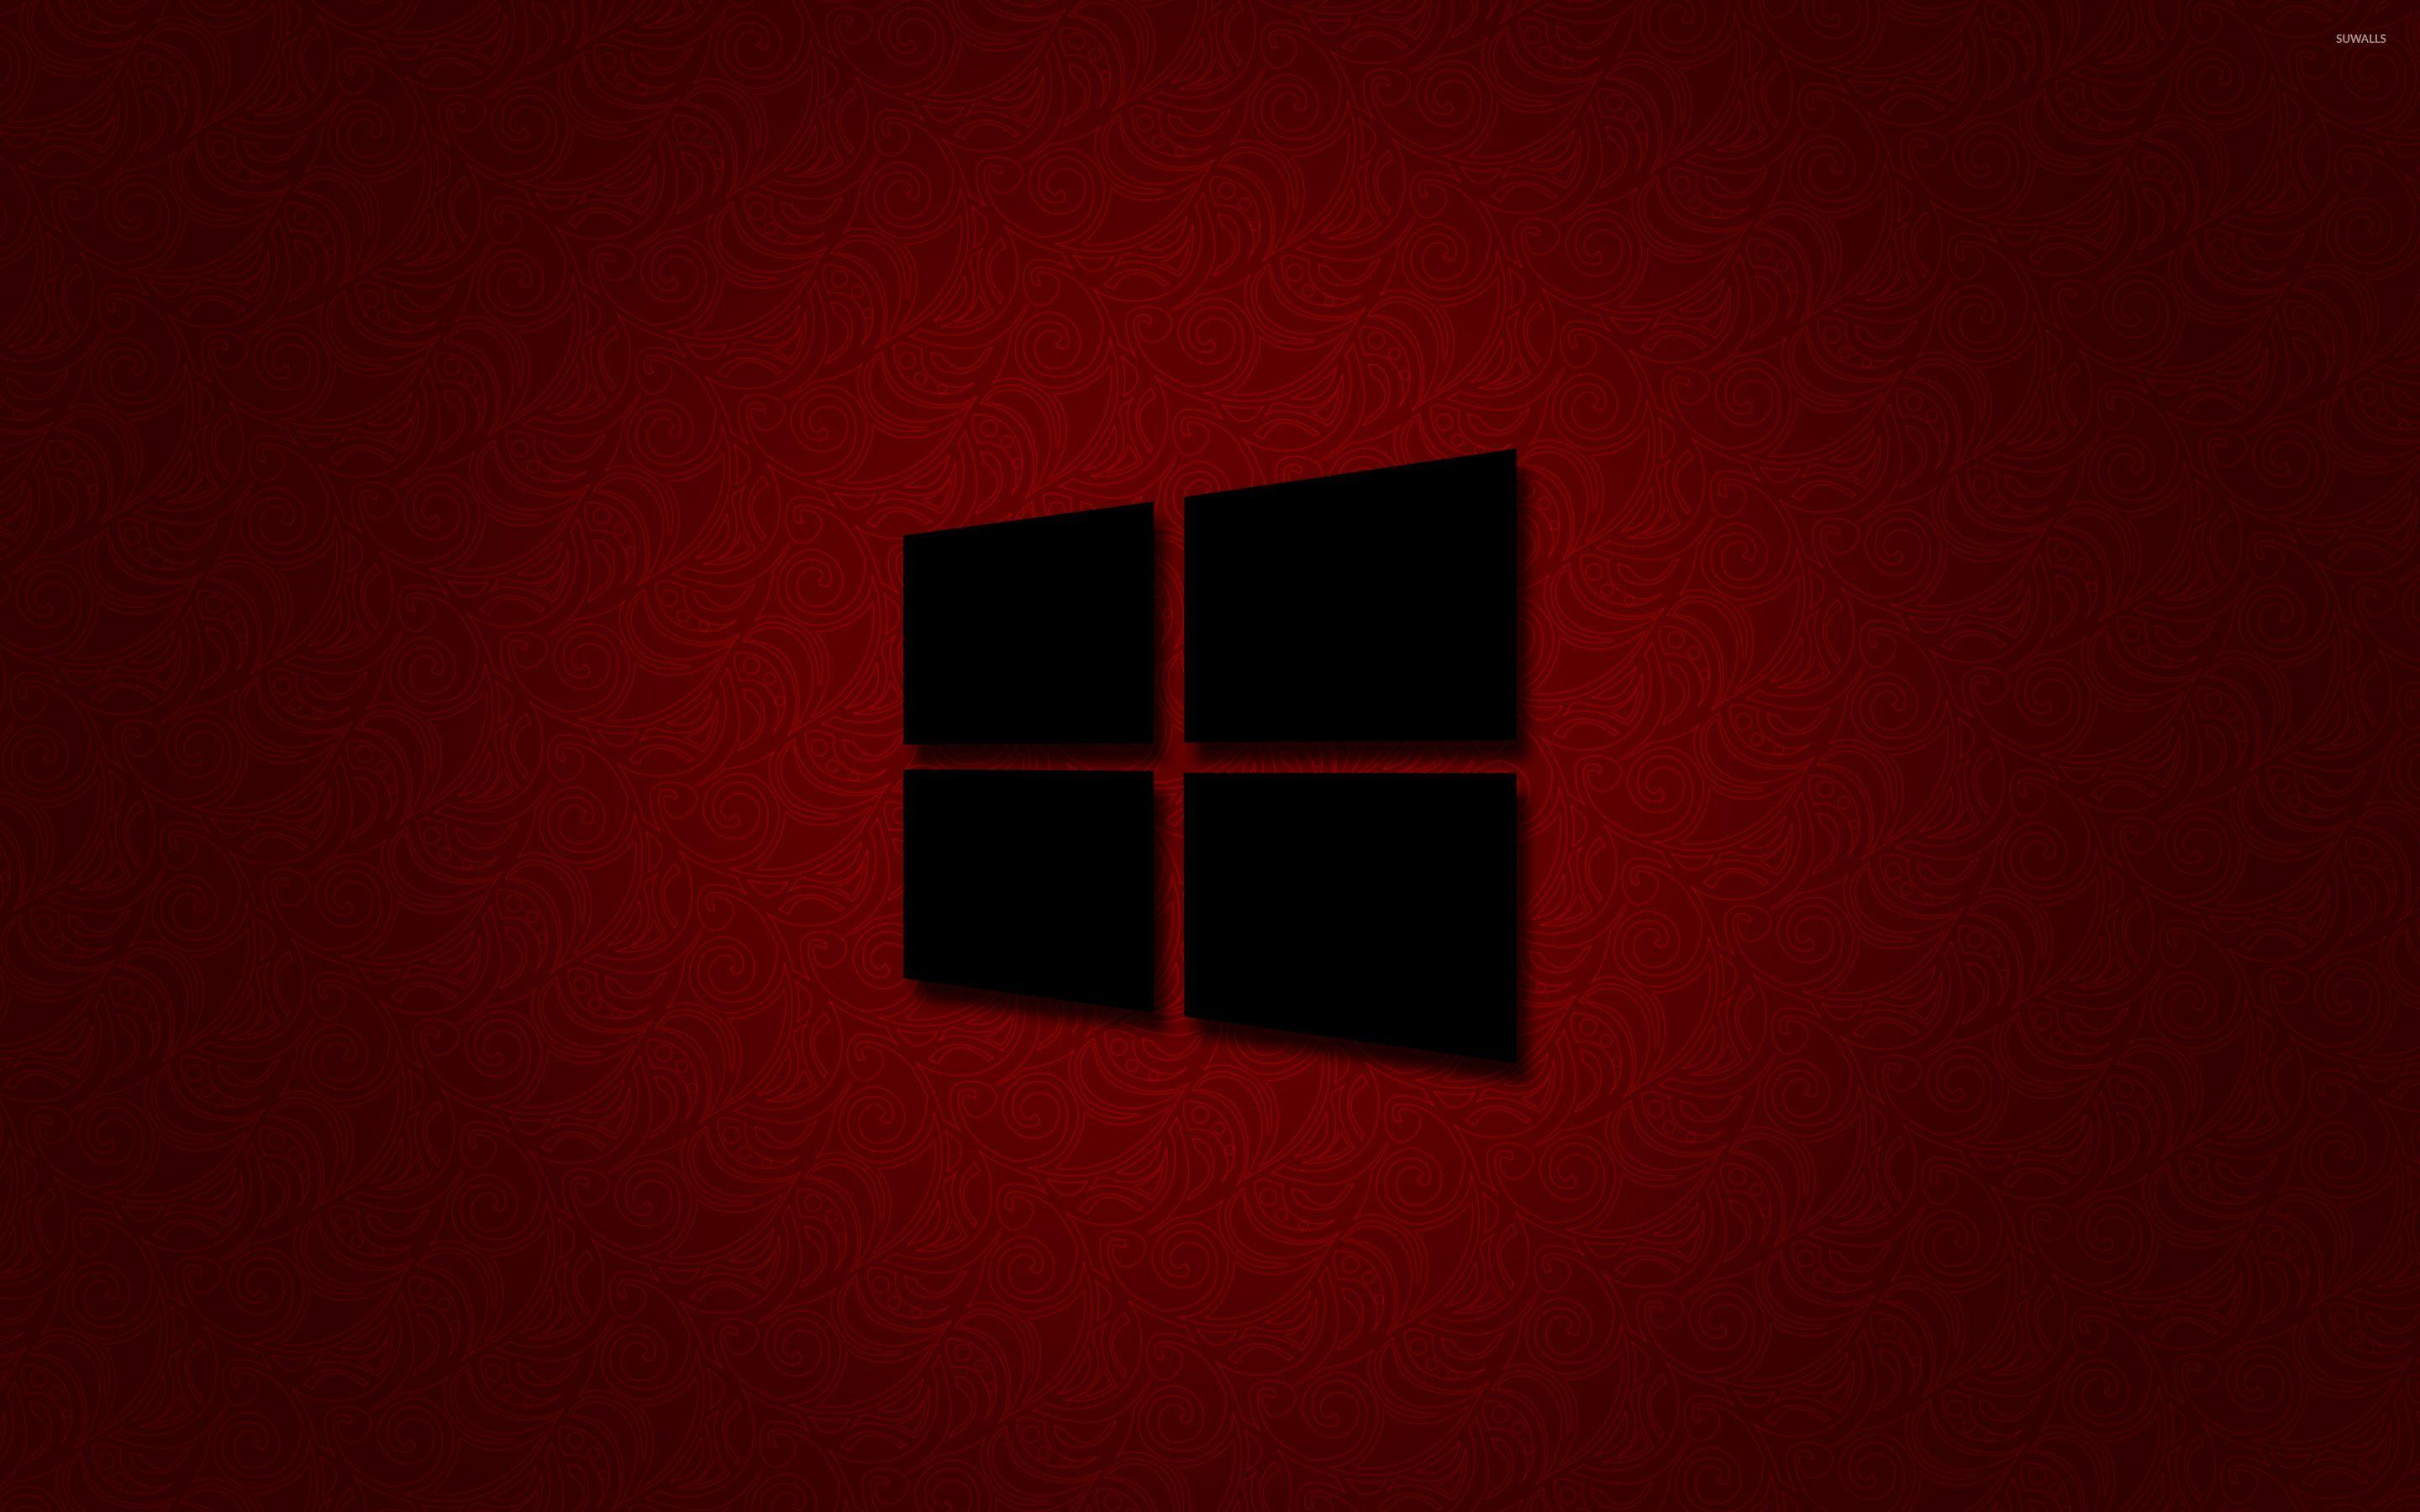 Red Windows Logo - Windows 10 black logo on red wallpaper - Computer wallpapers - #45695